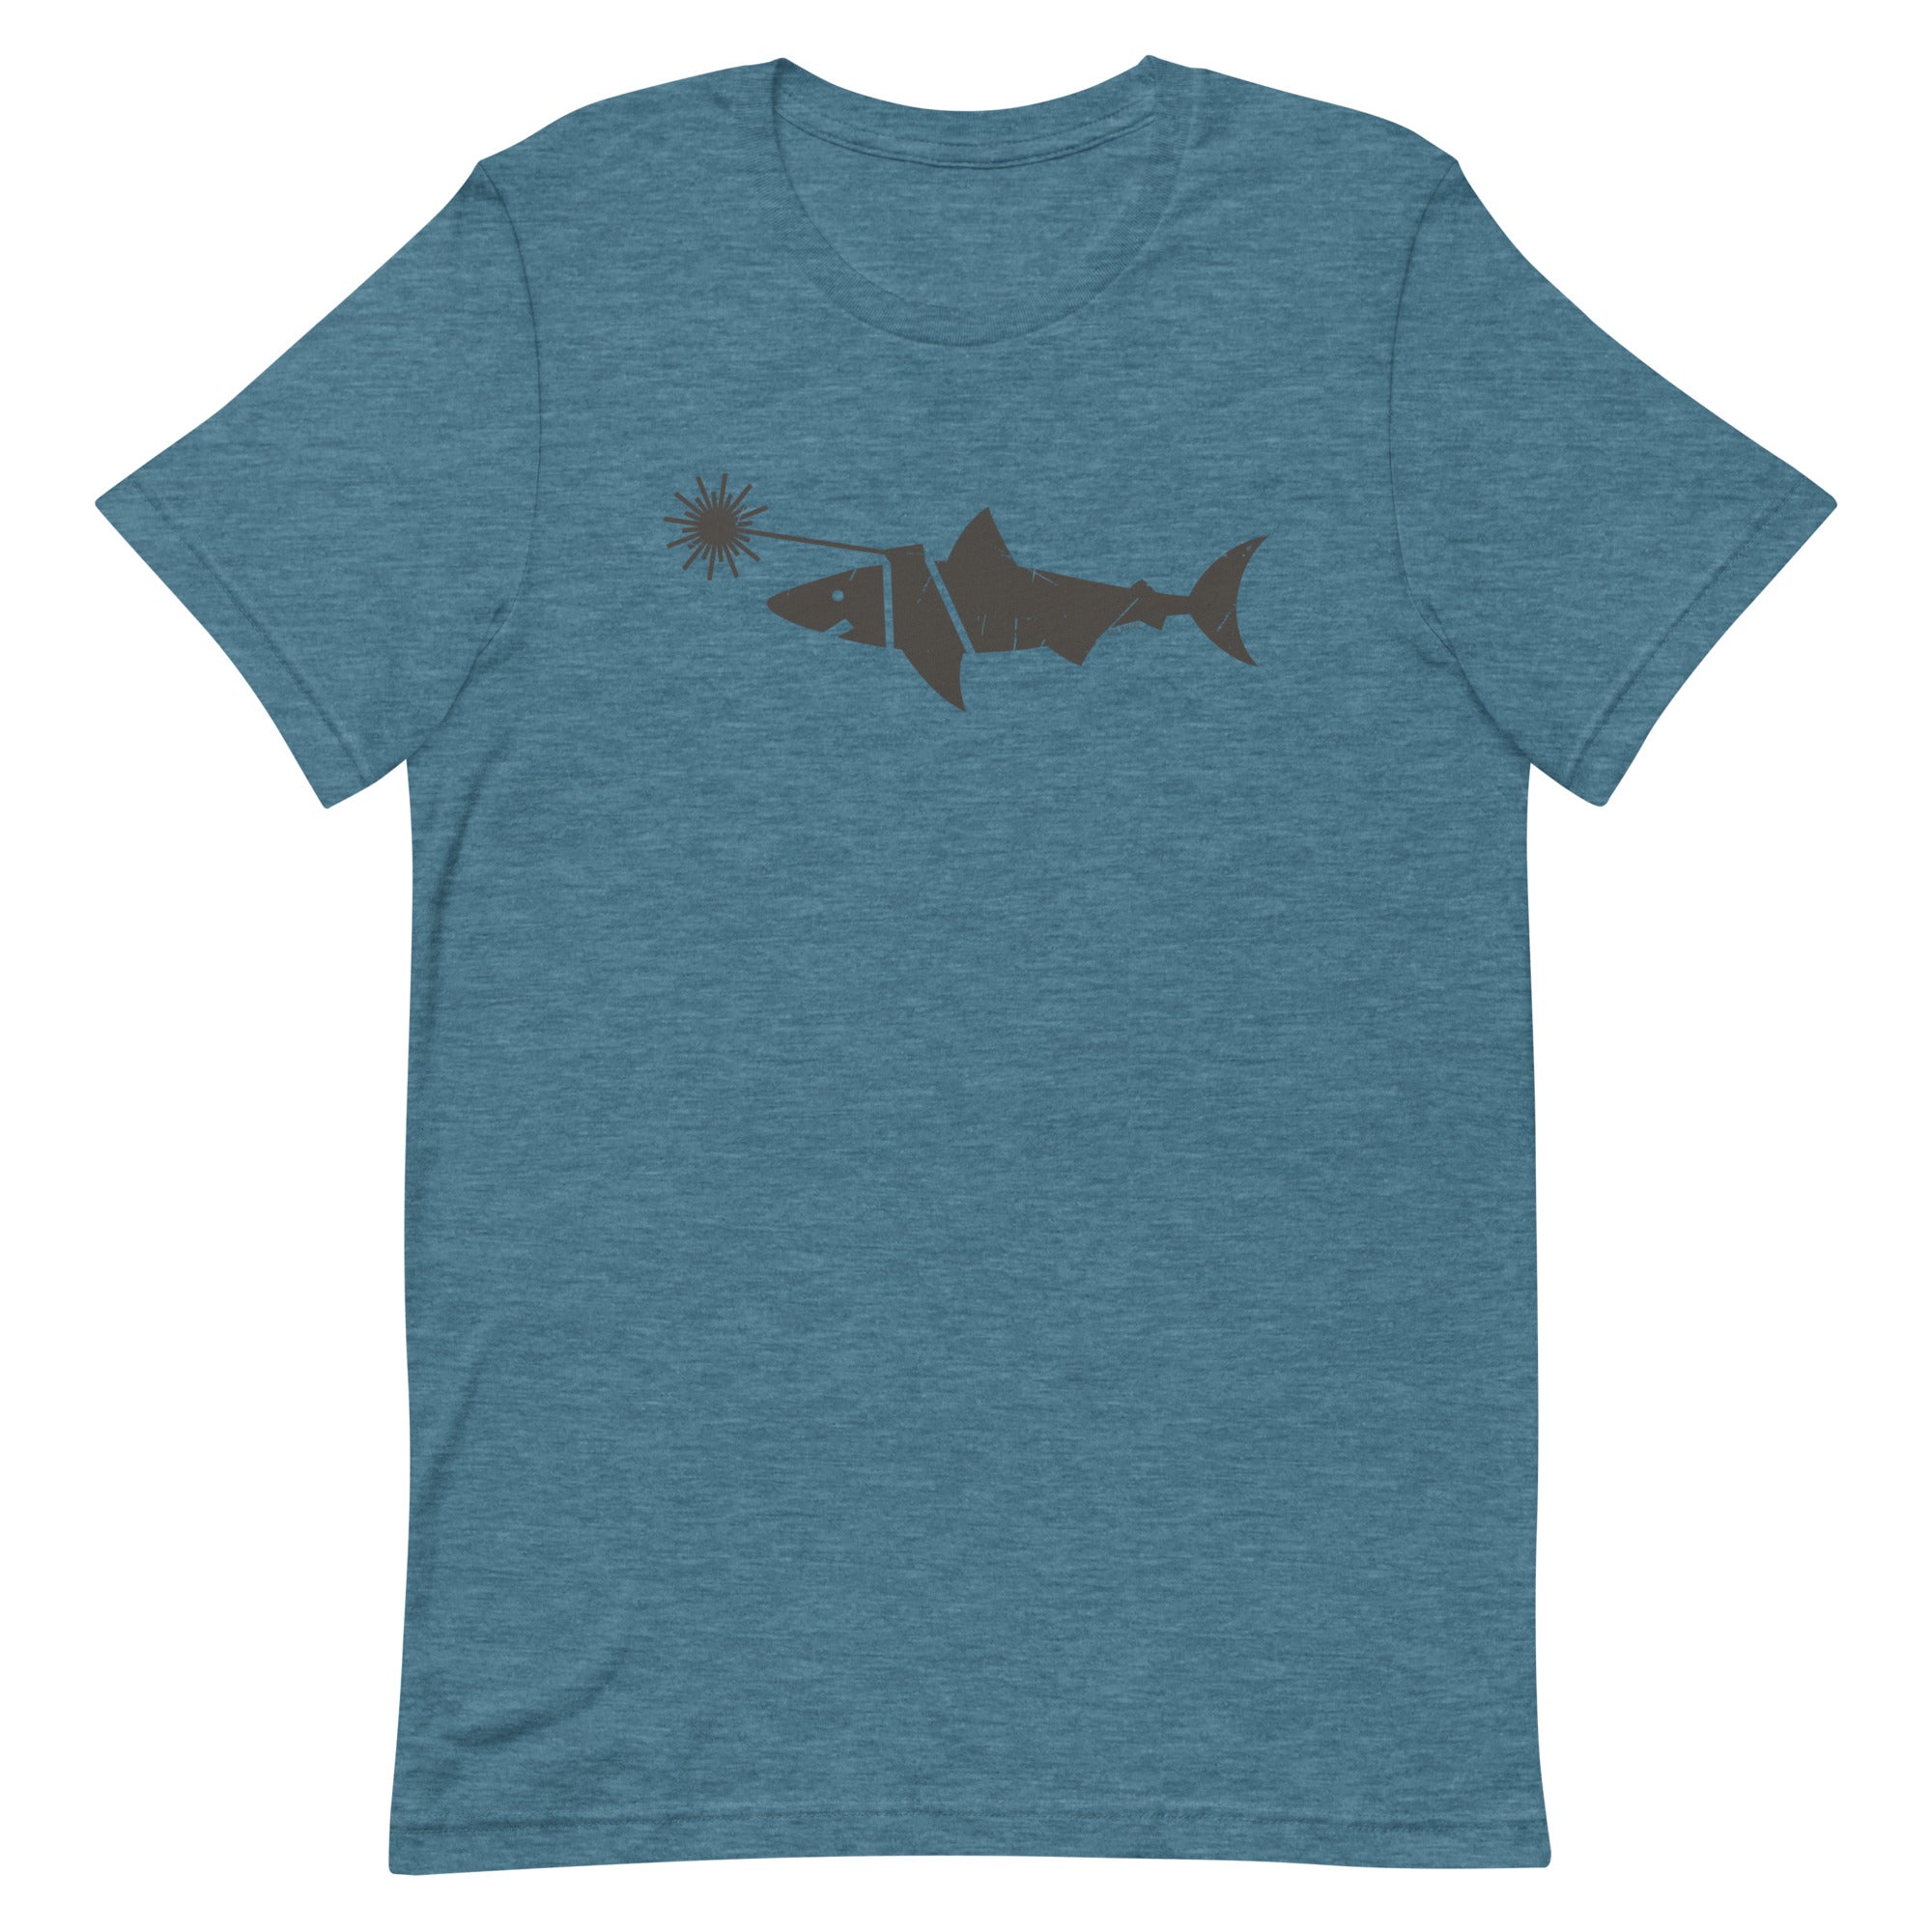 Laser Shark Unisex T-Shirt